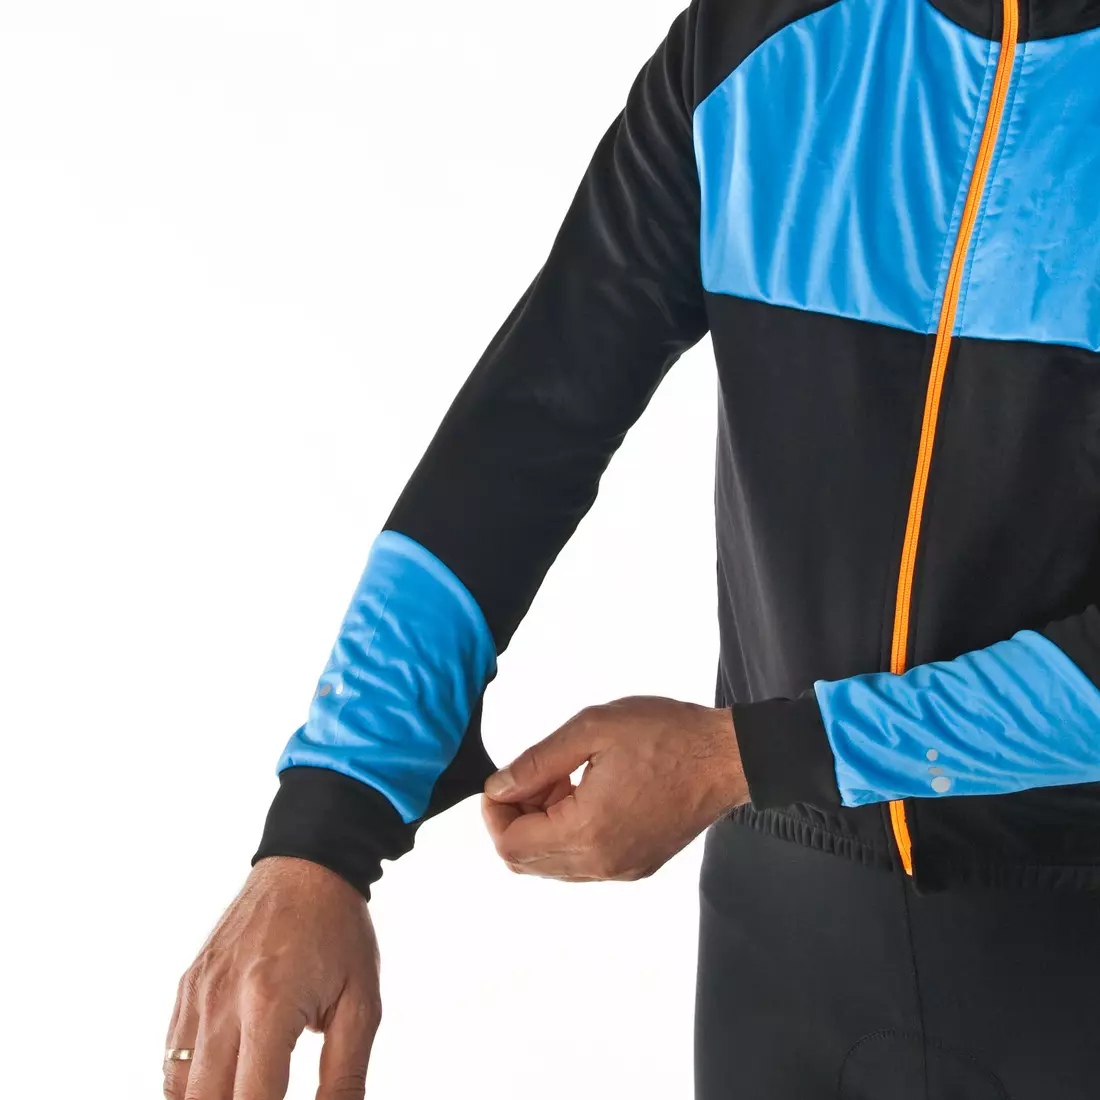 KAYMAQ JWS-002 Softshell men's winter bike jacket, blue-black